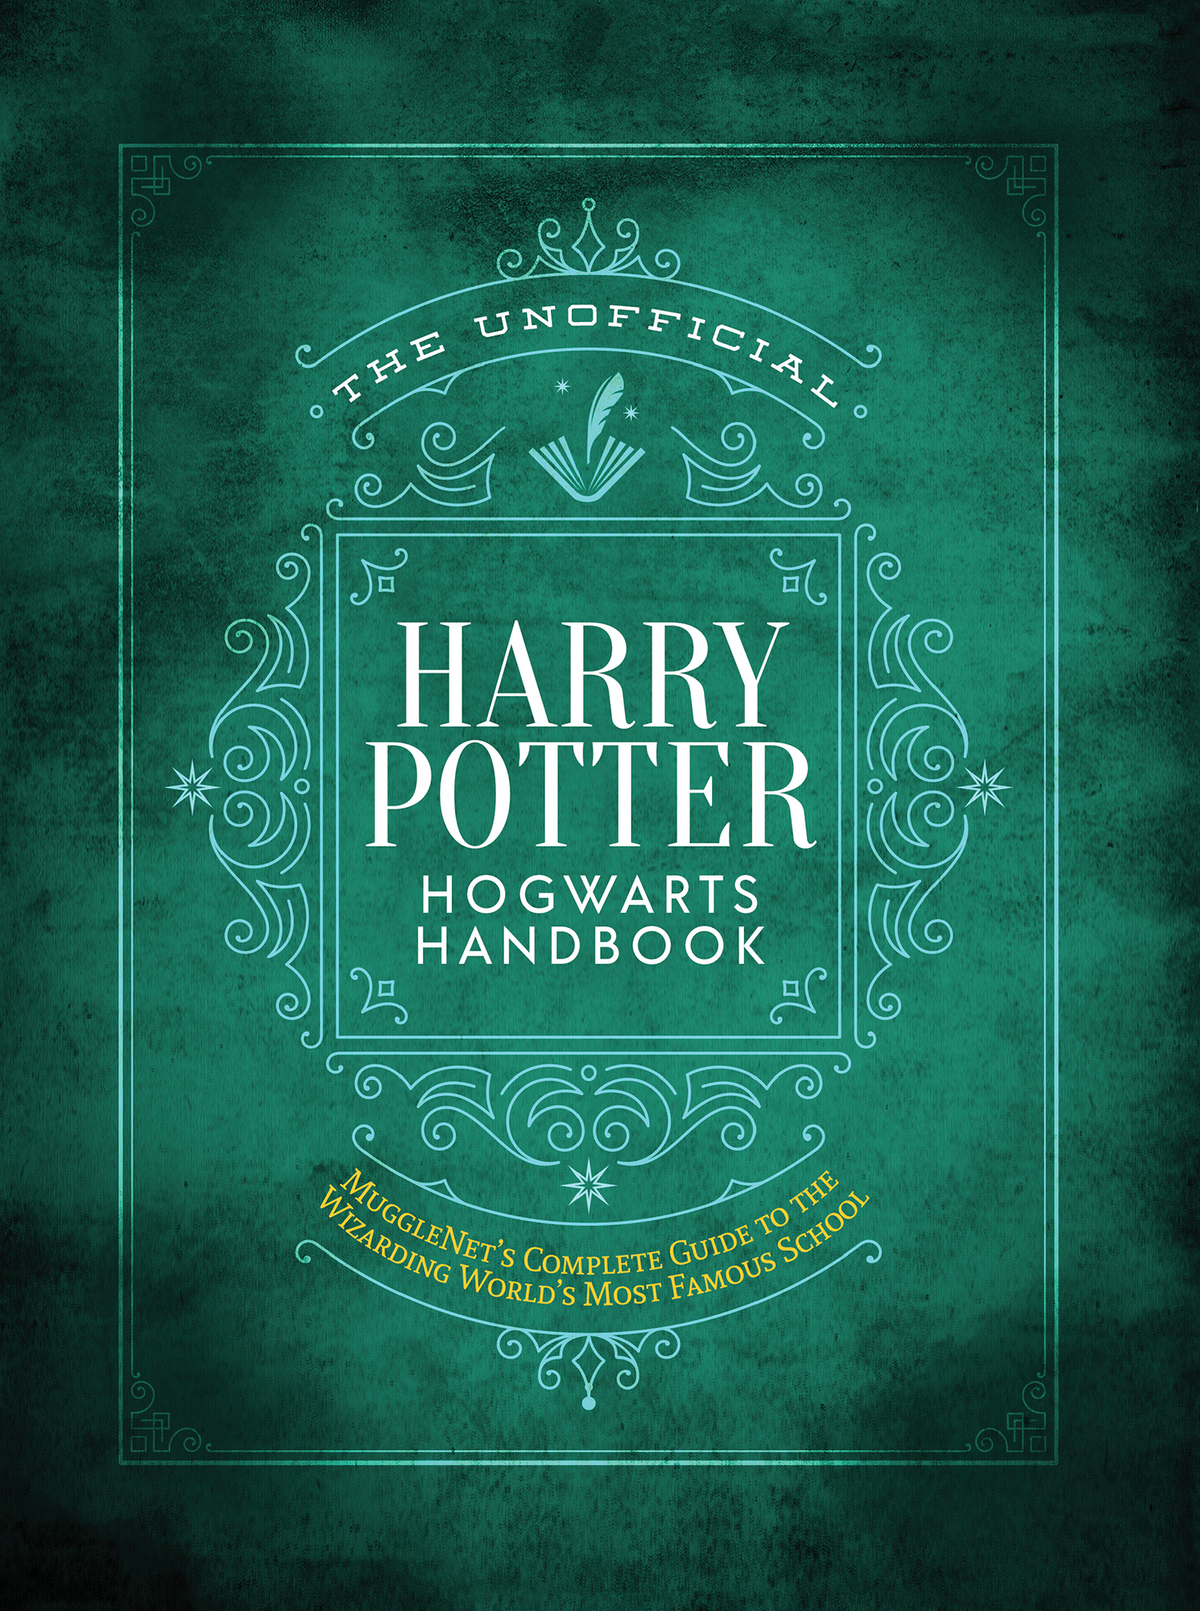 “The Unofficial Harry Potter Hogwarts Handbook”